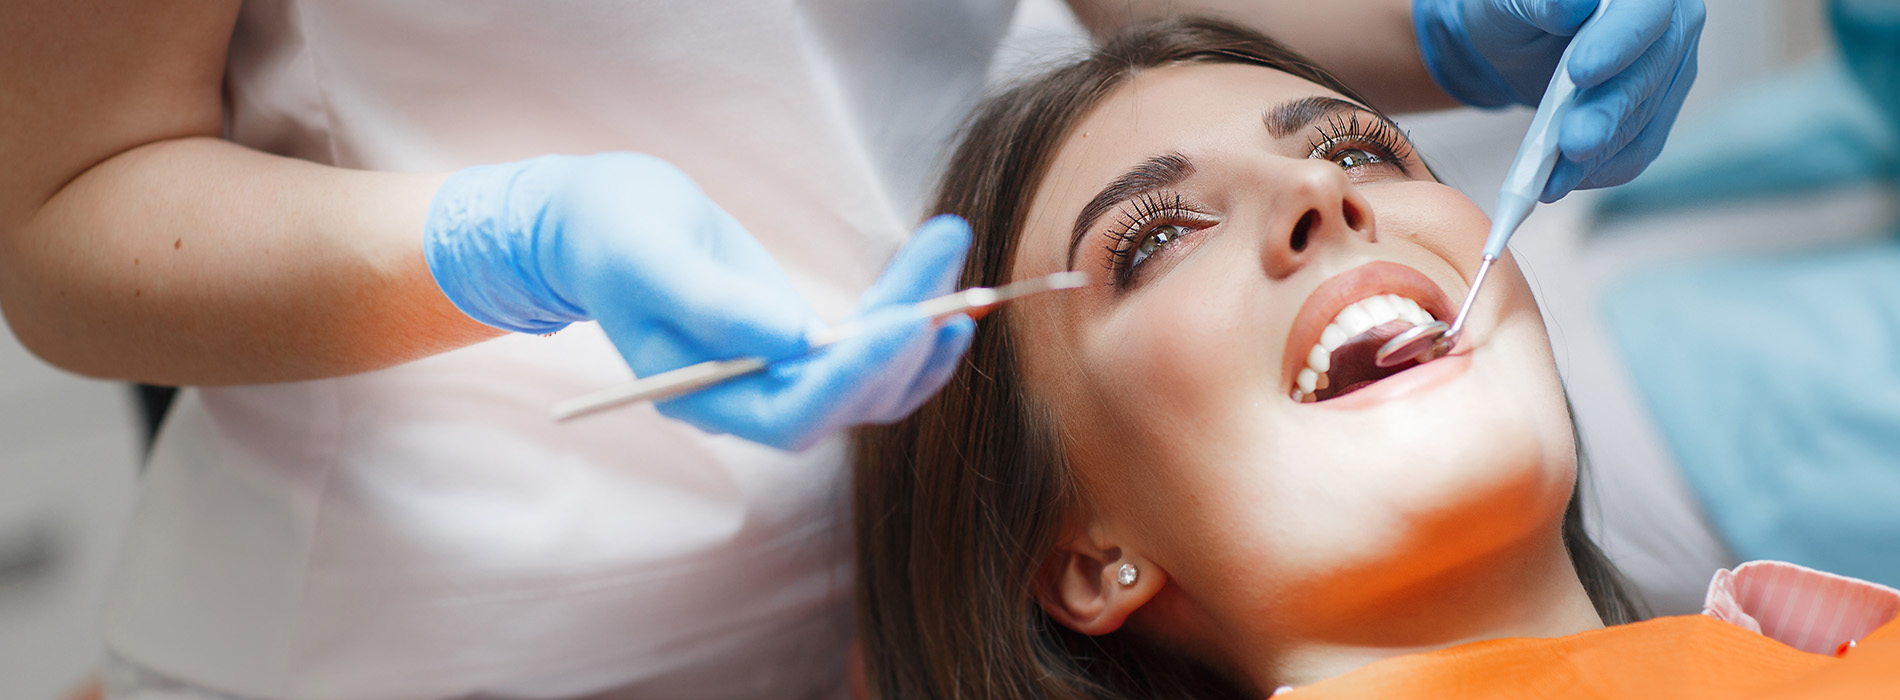 Bright Smile Dental Care, LTD | Sleep Apnea, ClearCorrect reg  and Periodontal Treatment